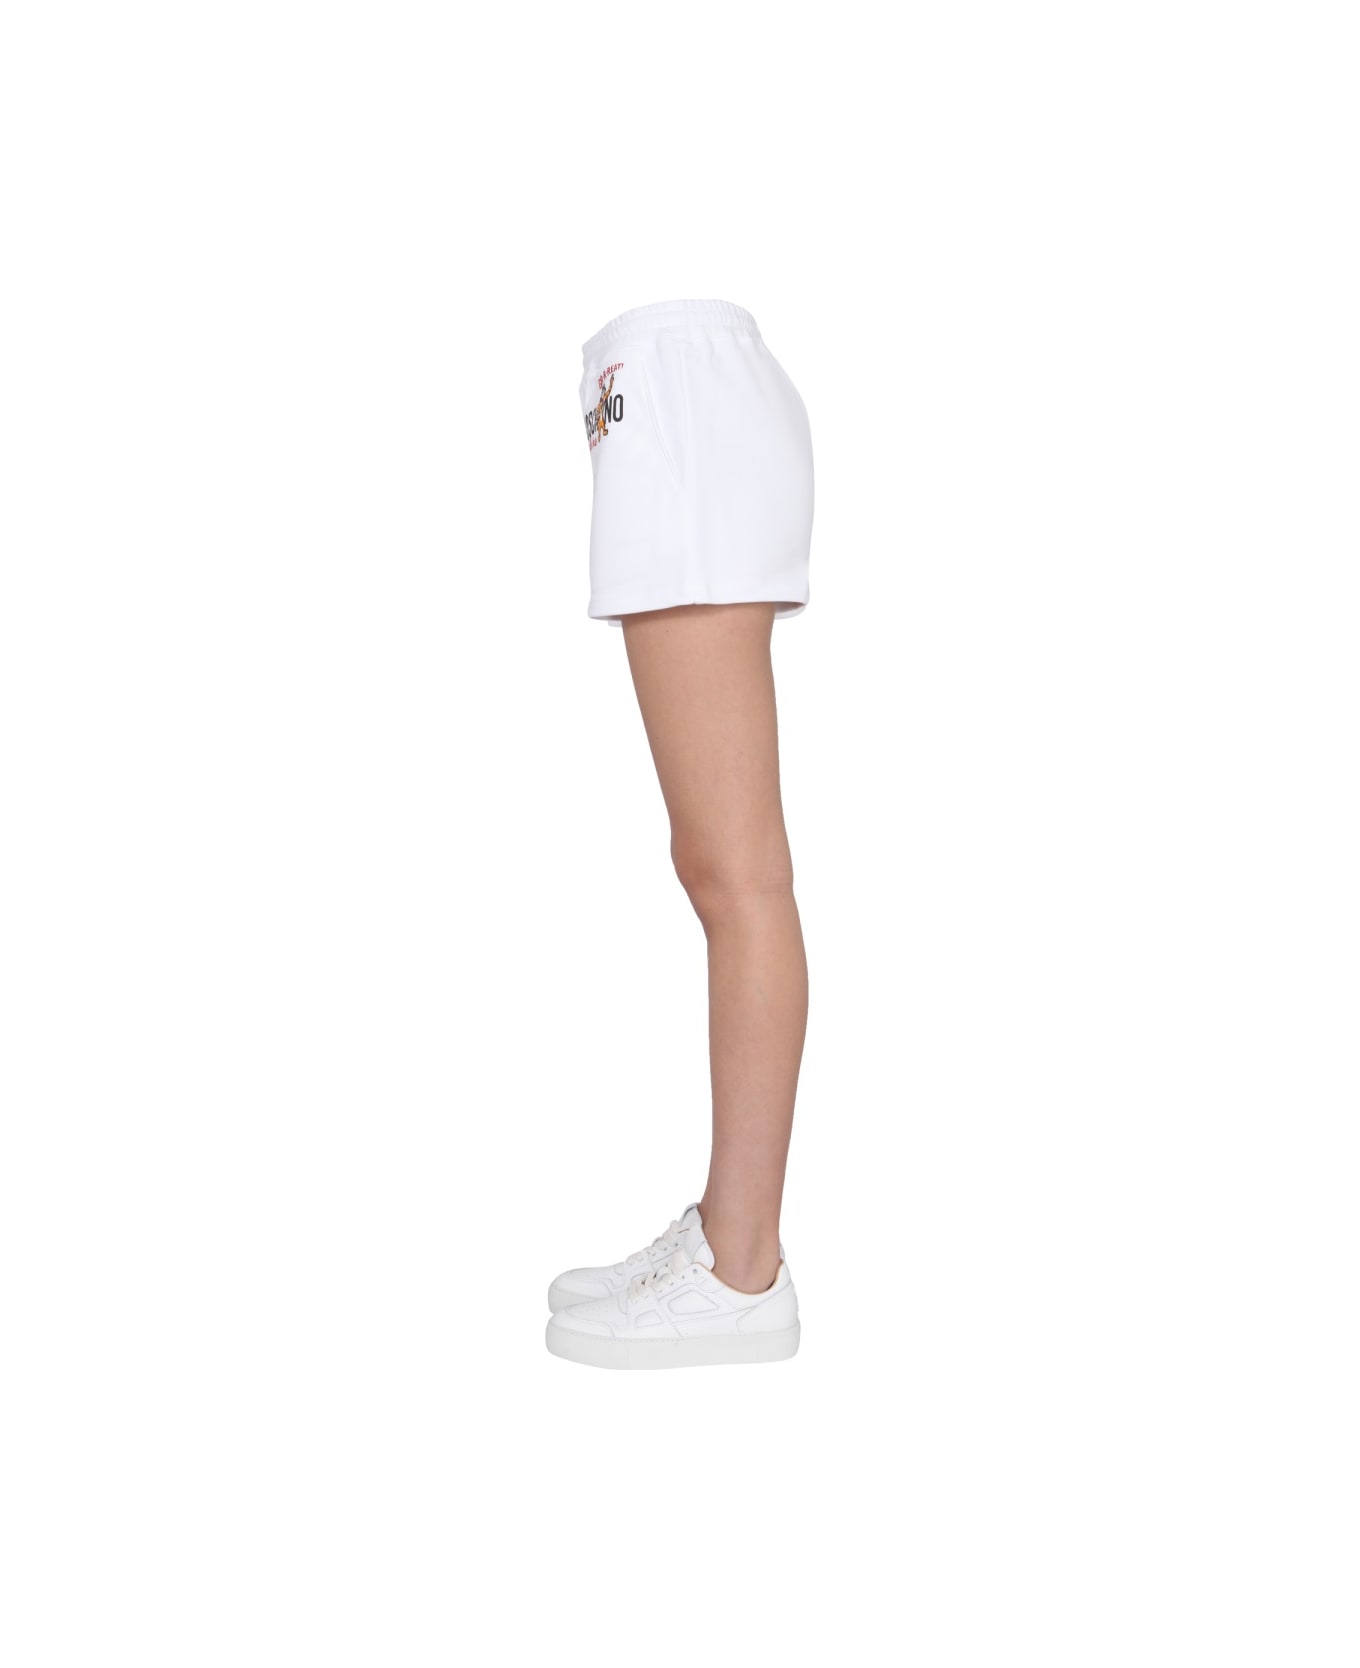 Moschino X Kellogg's Shorts - WHITE